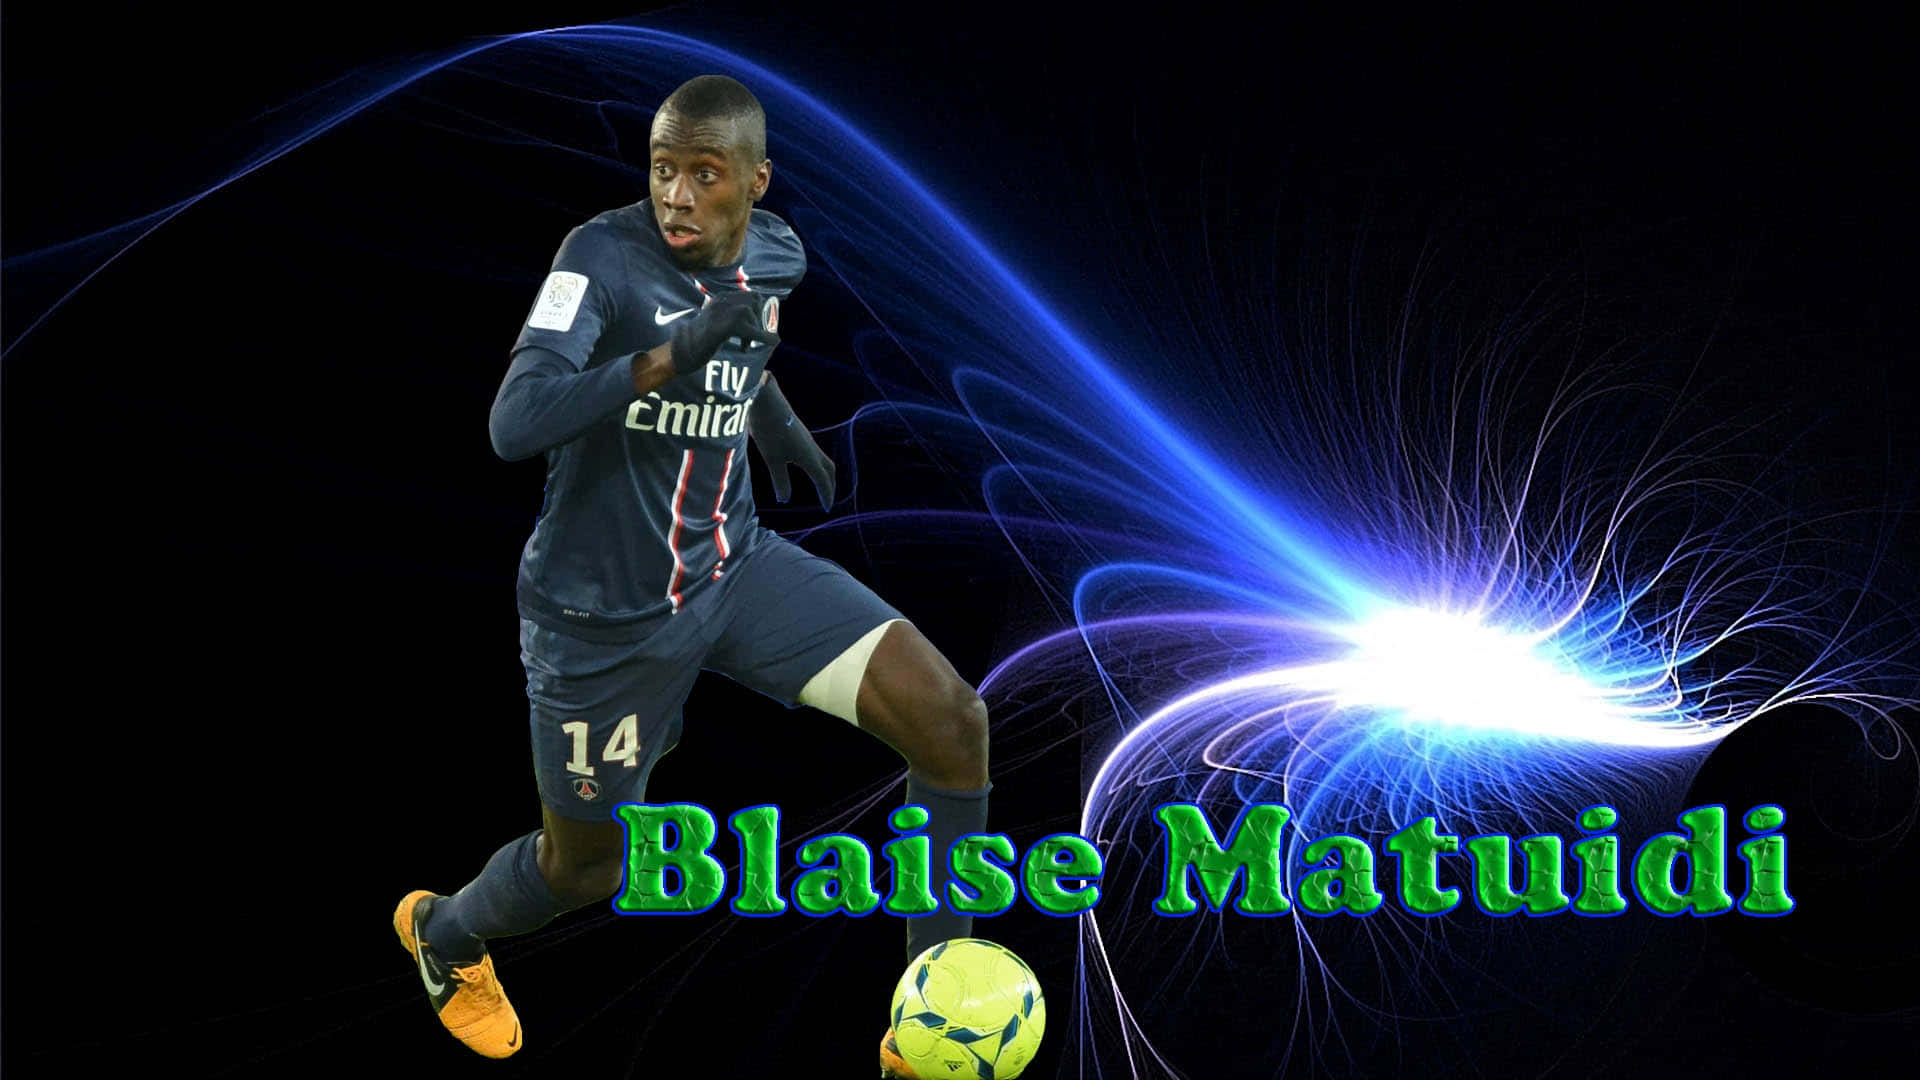 Dynamic Footballer Blaise Matuidi in Action Wallpaper